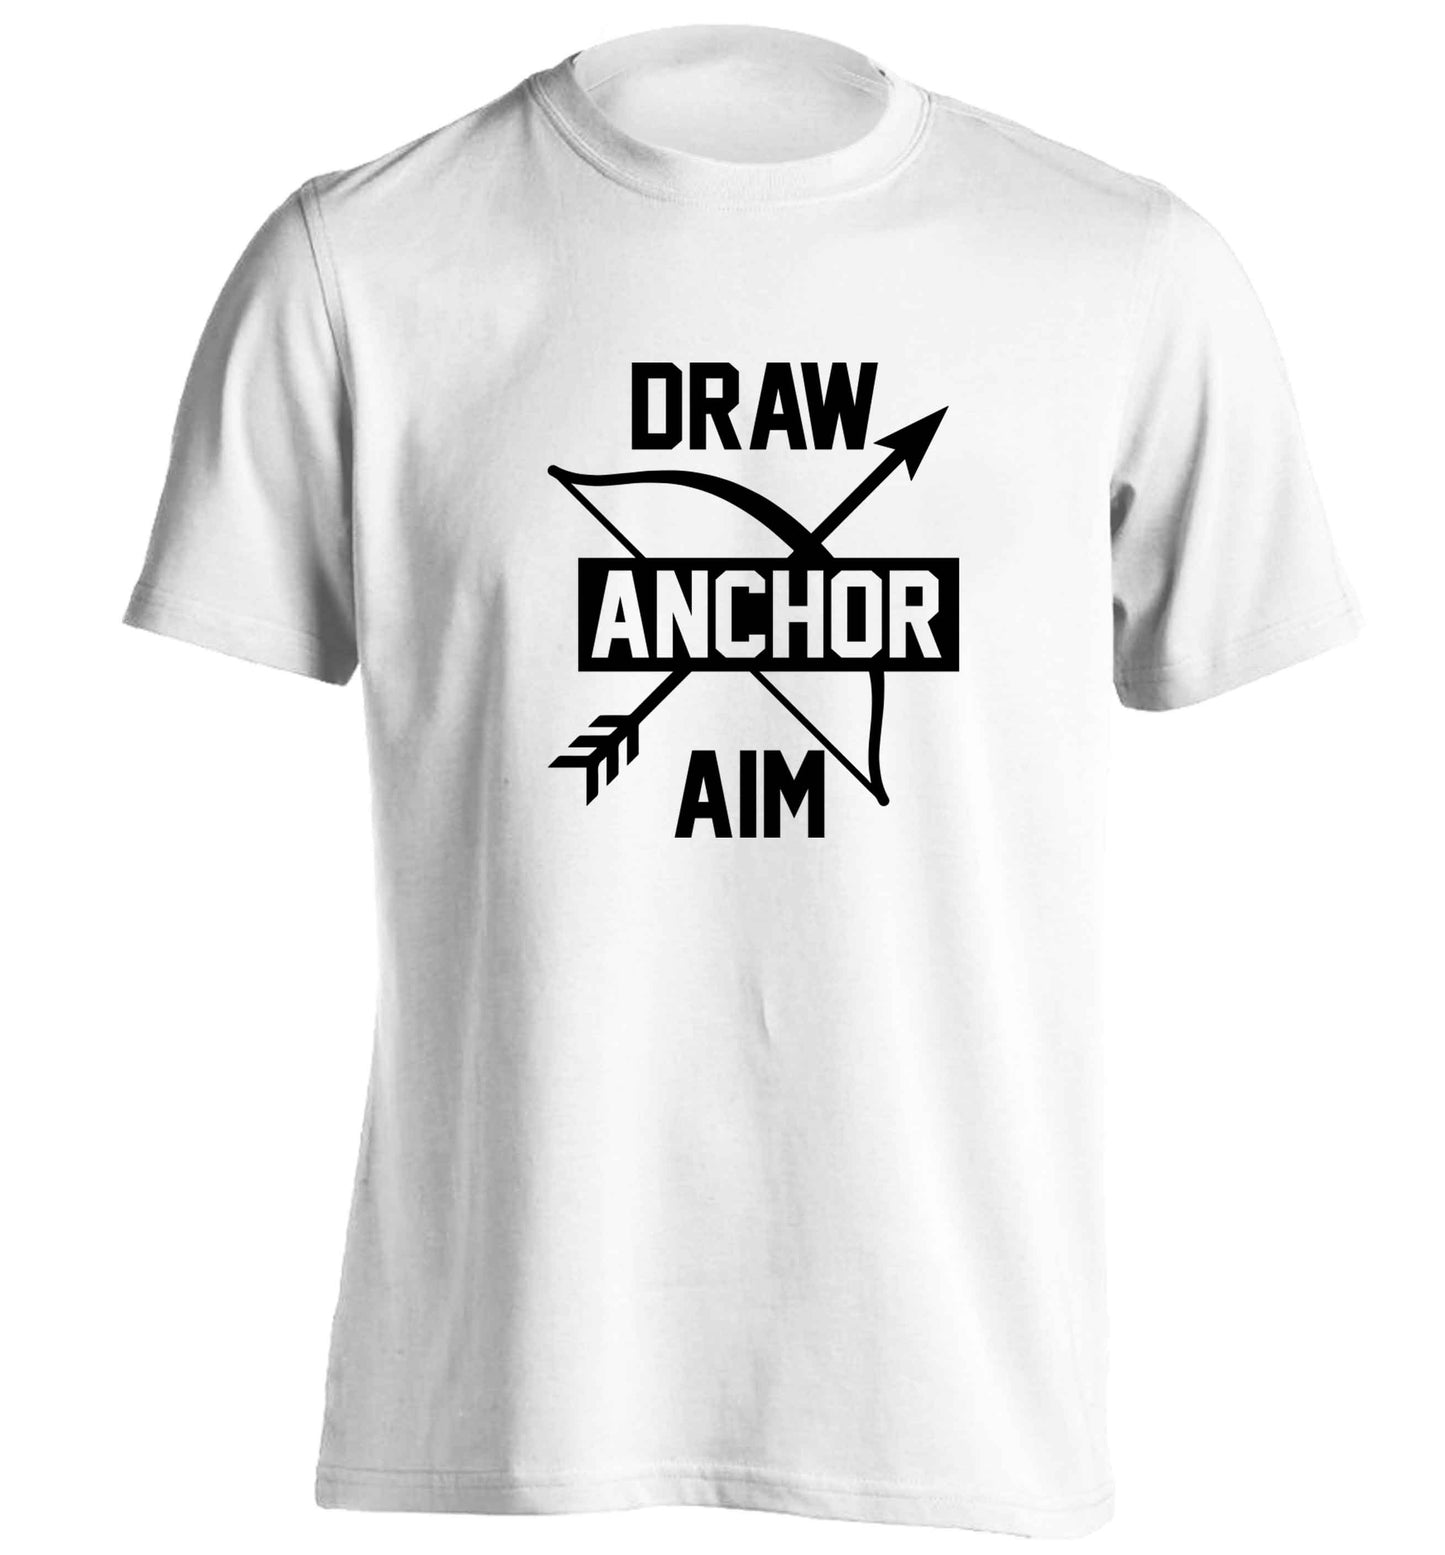 Draw anchor aim adults unisex white Tshirt 2XL